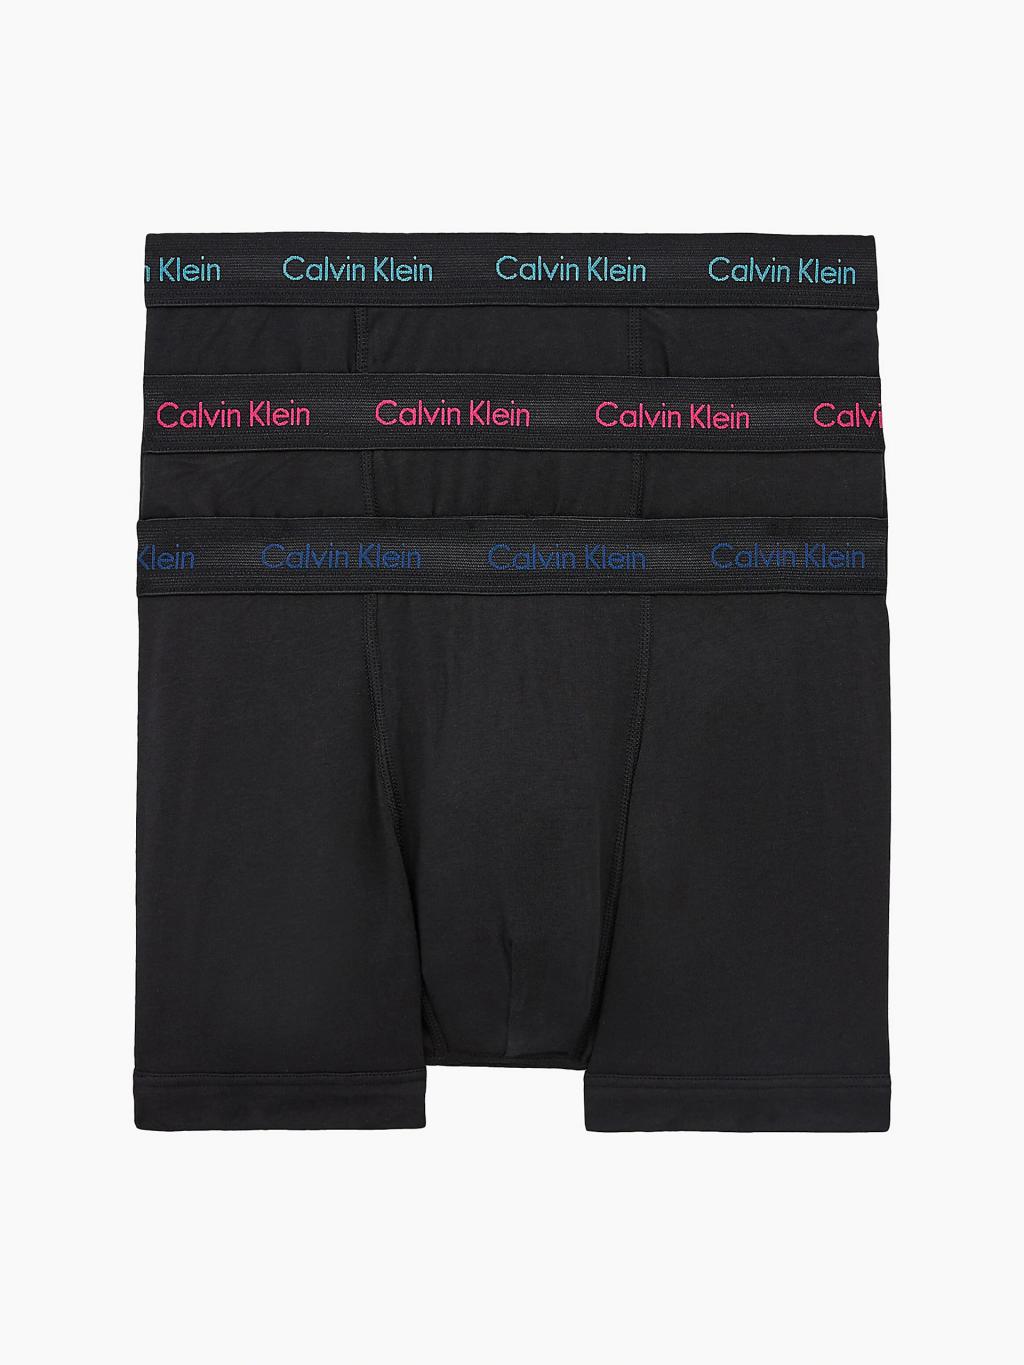 9HC - U2662 pánské boxerky Calvin Klein 3pack